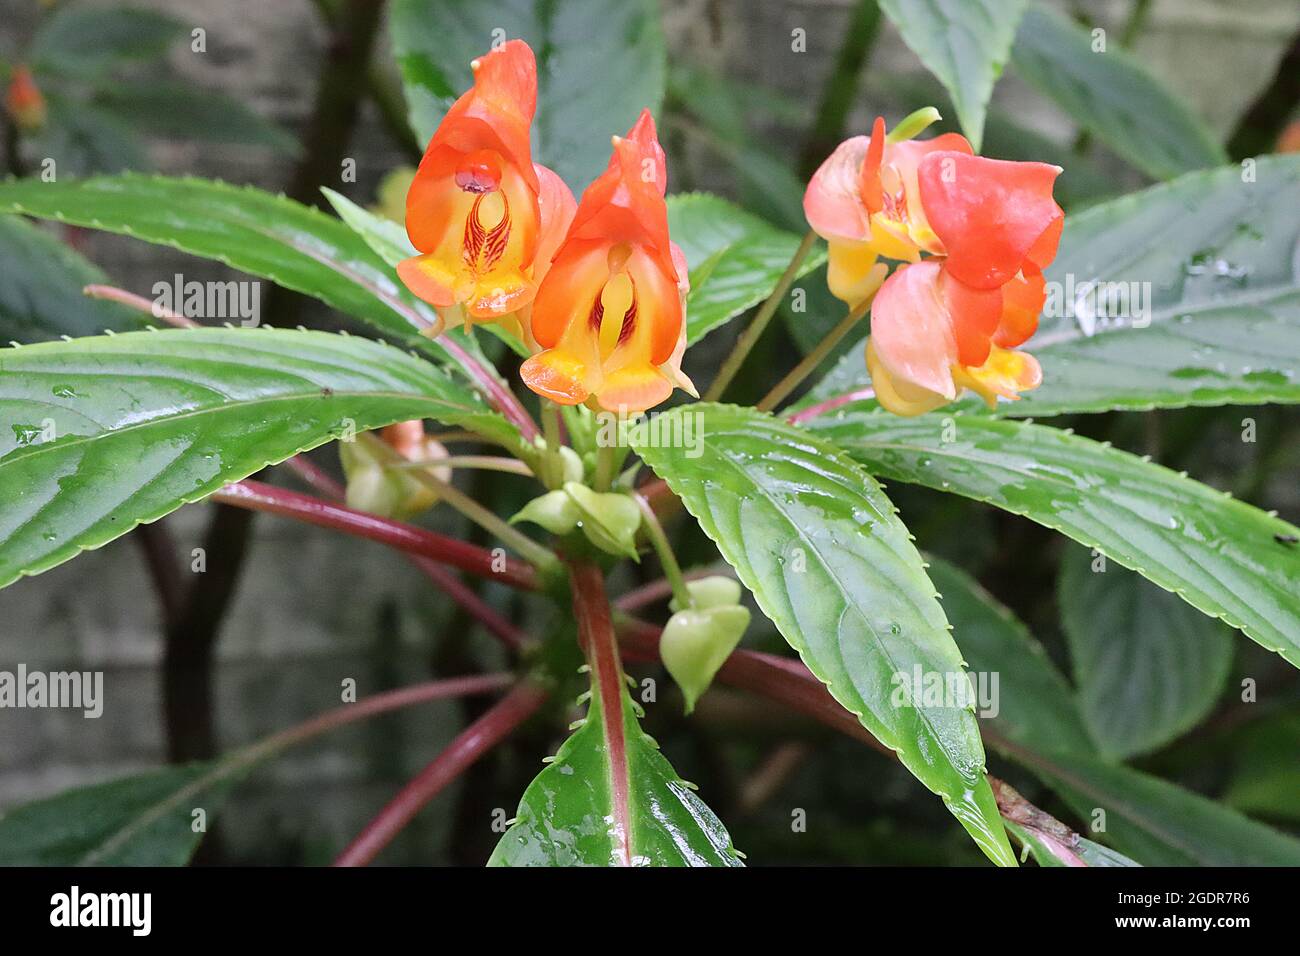 Impatiens auricoma x bicaudata Orange hooded flowers and large pinnate ribbed leaves,  July, England, UK Stock Photo